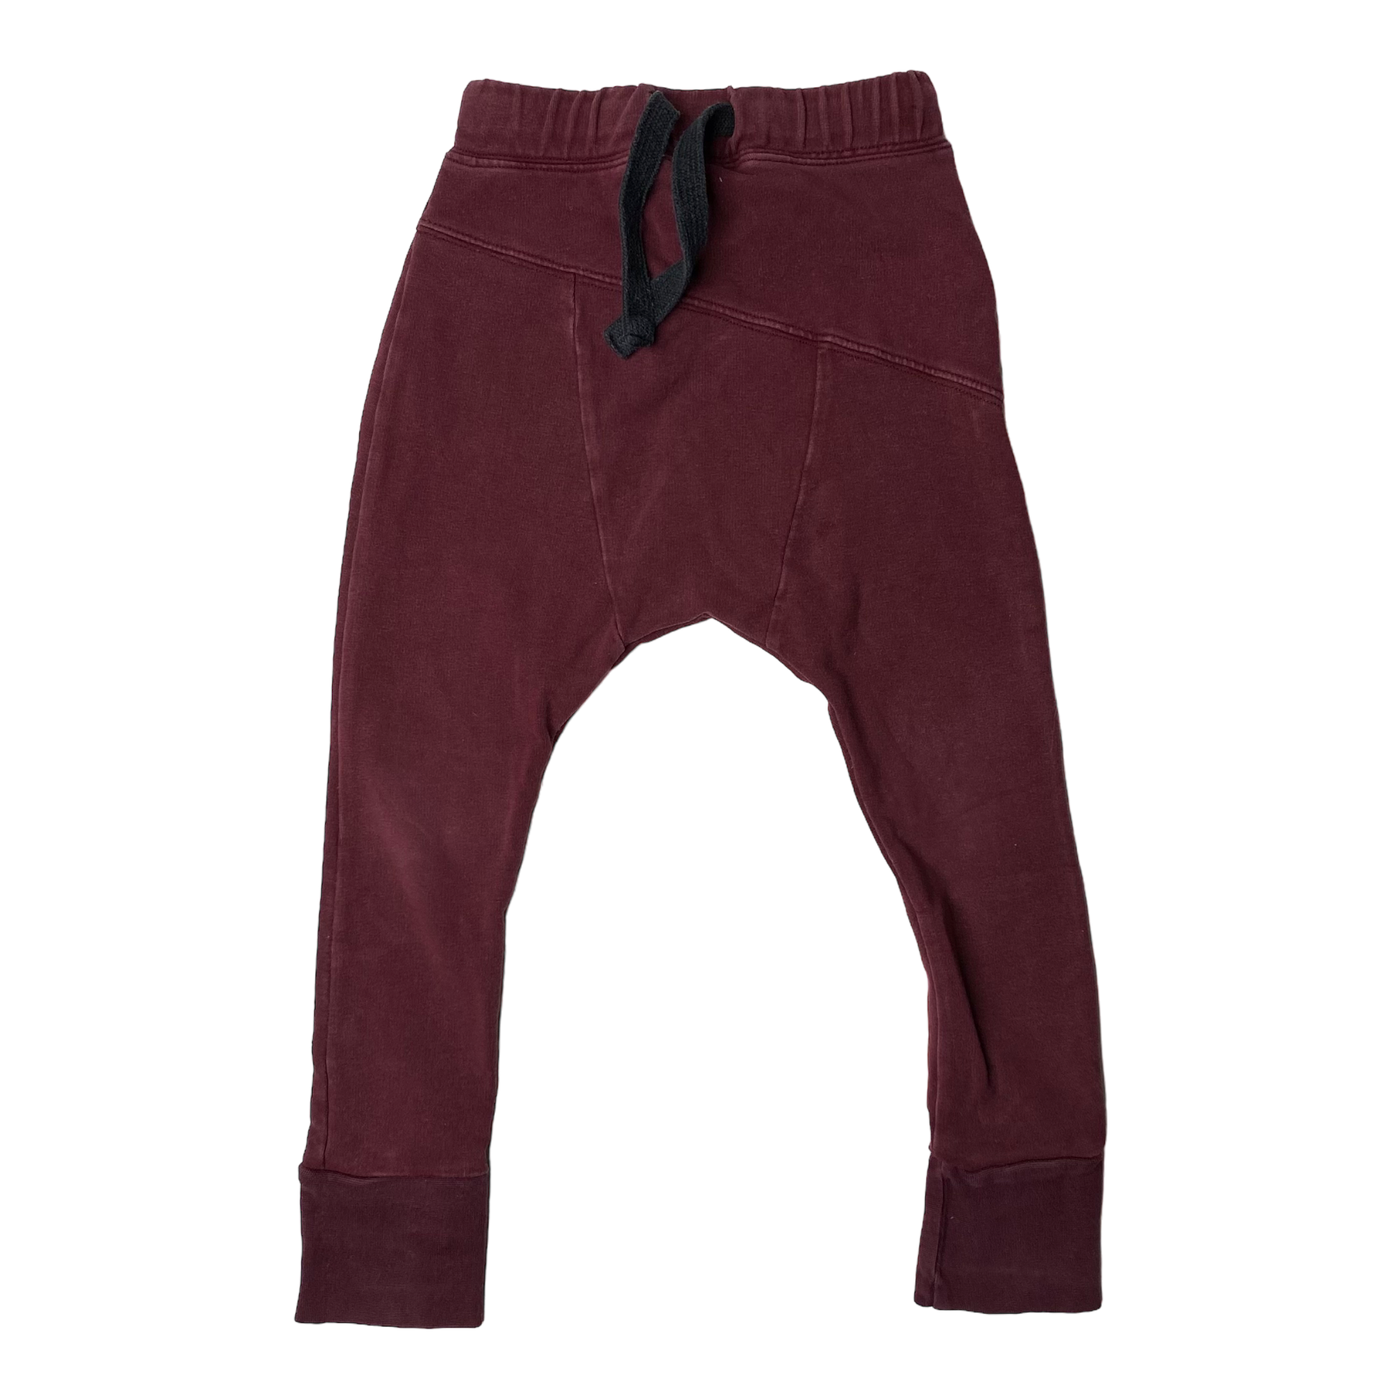 Kaiko sweat pants, burgundy | 110/116cm